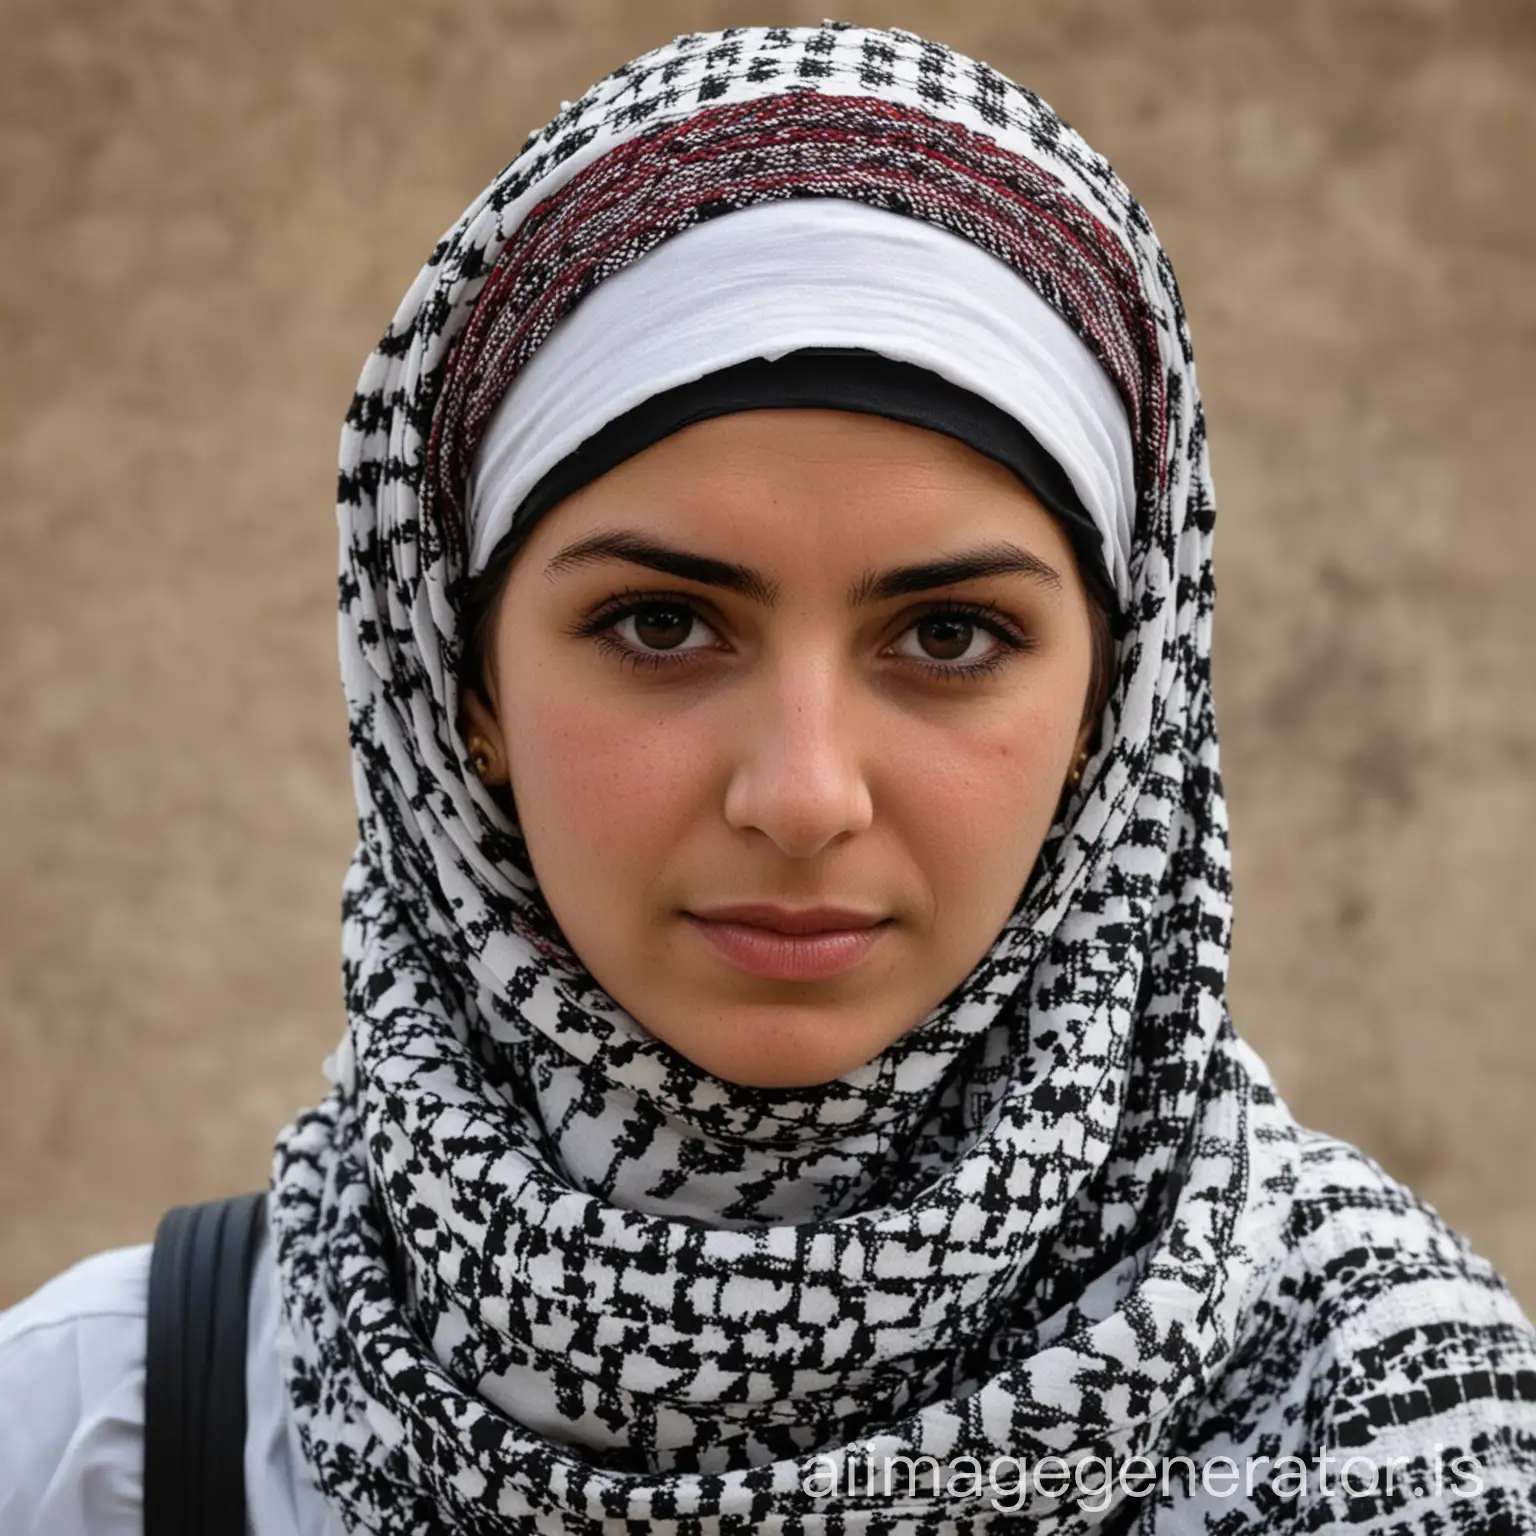 A woman wearing a Palestinian keffiyeh